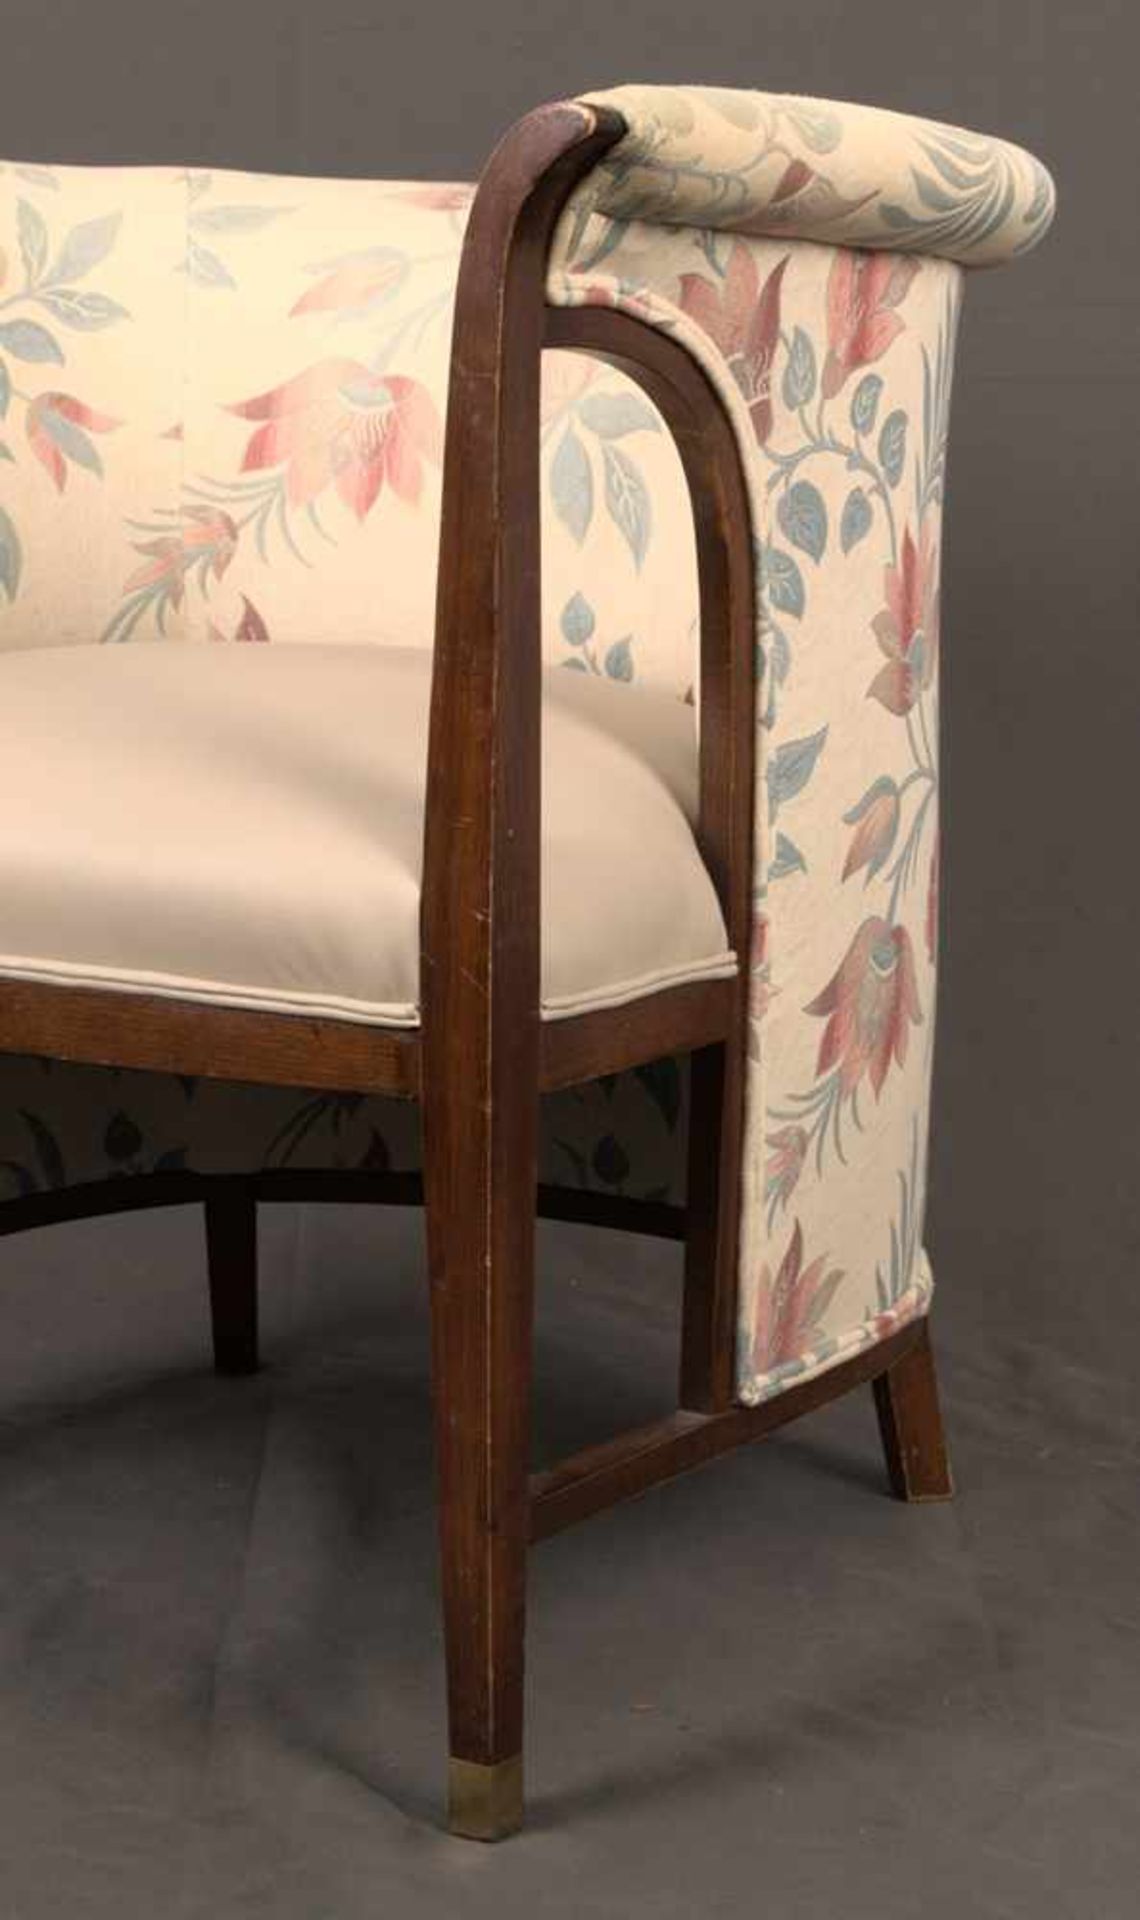 Wiener Polstersessel, hufeisenförmiges, gepolstertes Sesselgestell mit geraden, knatigen Beinen (die - Image 4 of 19